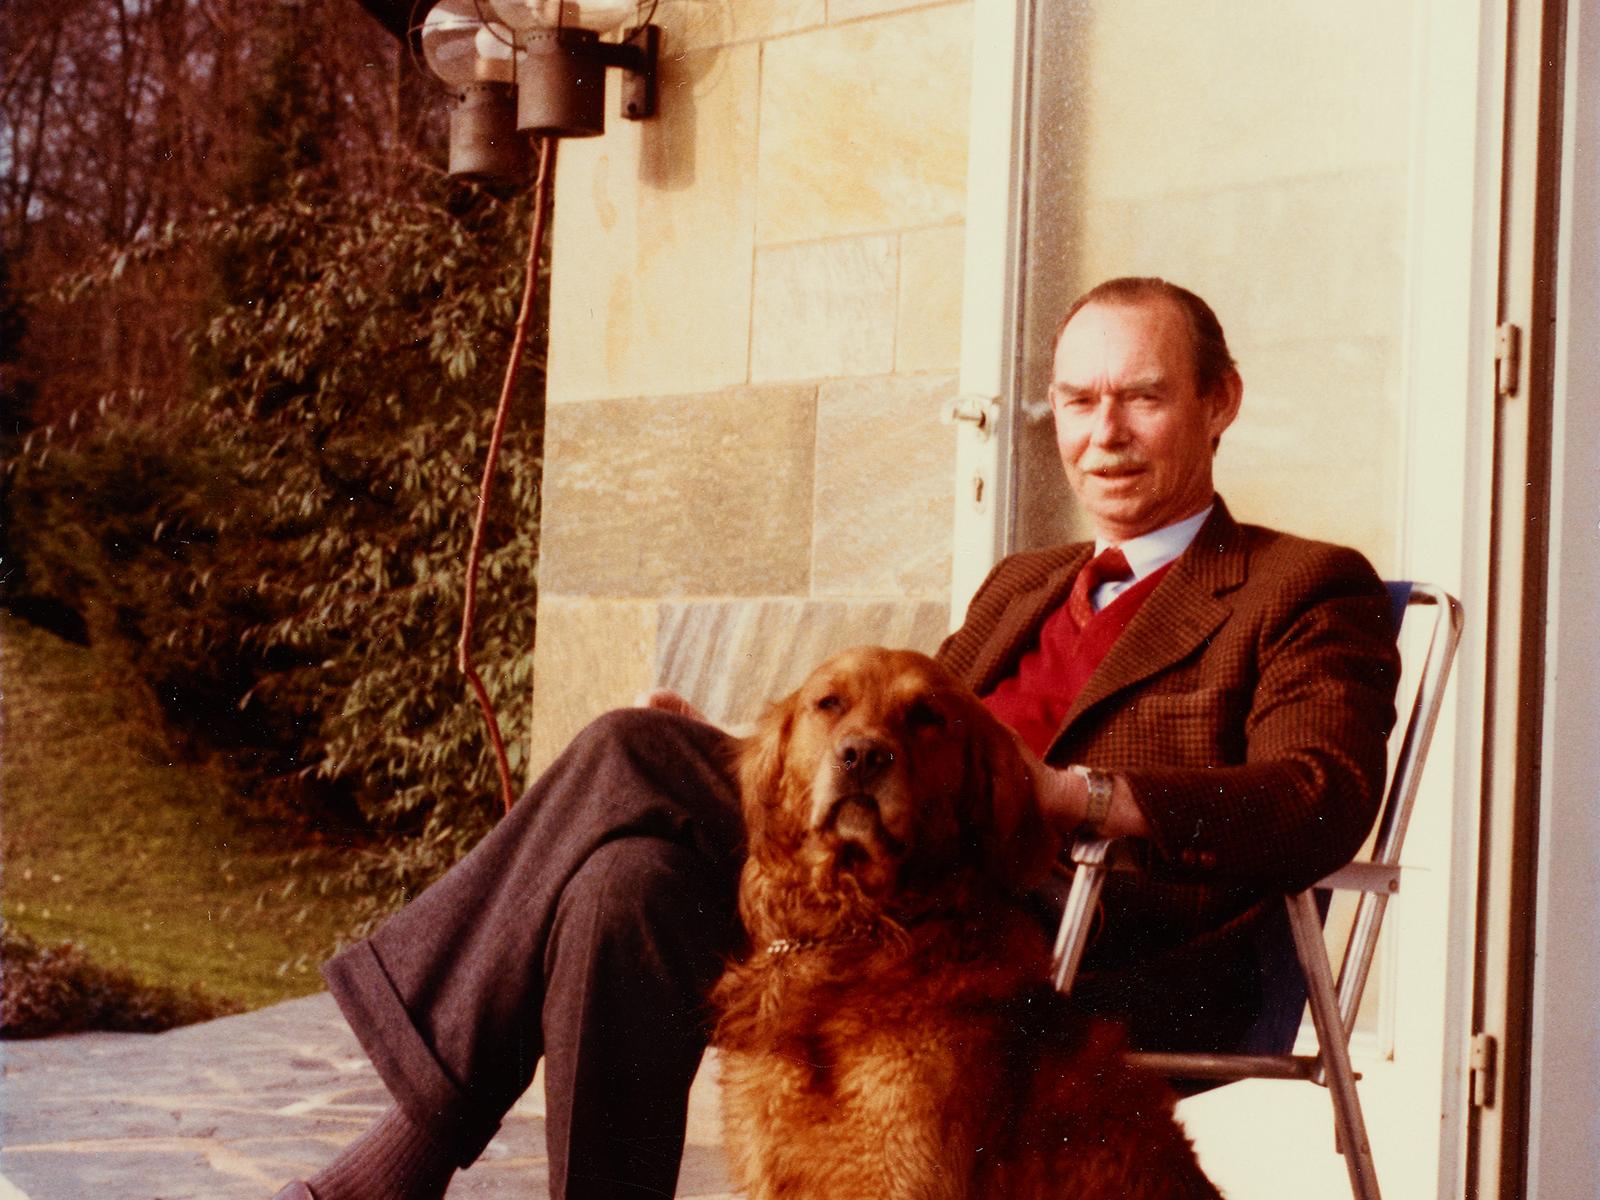 Grand Duke Jean with his dog Bronco